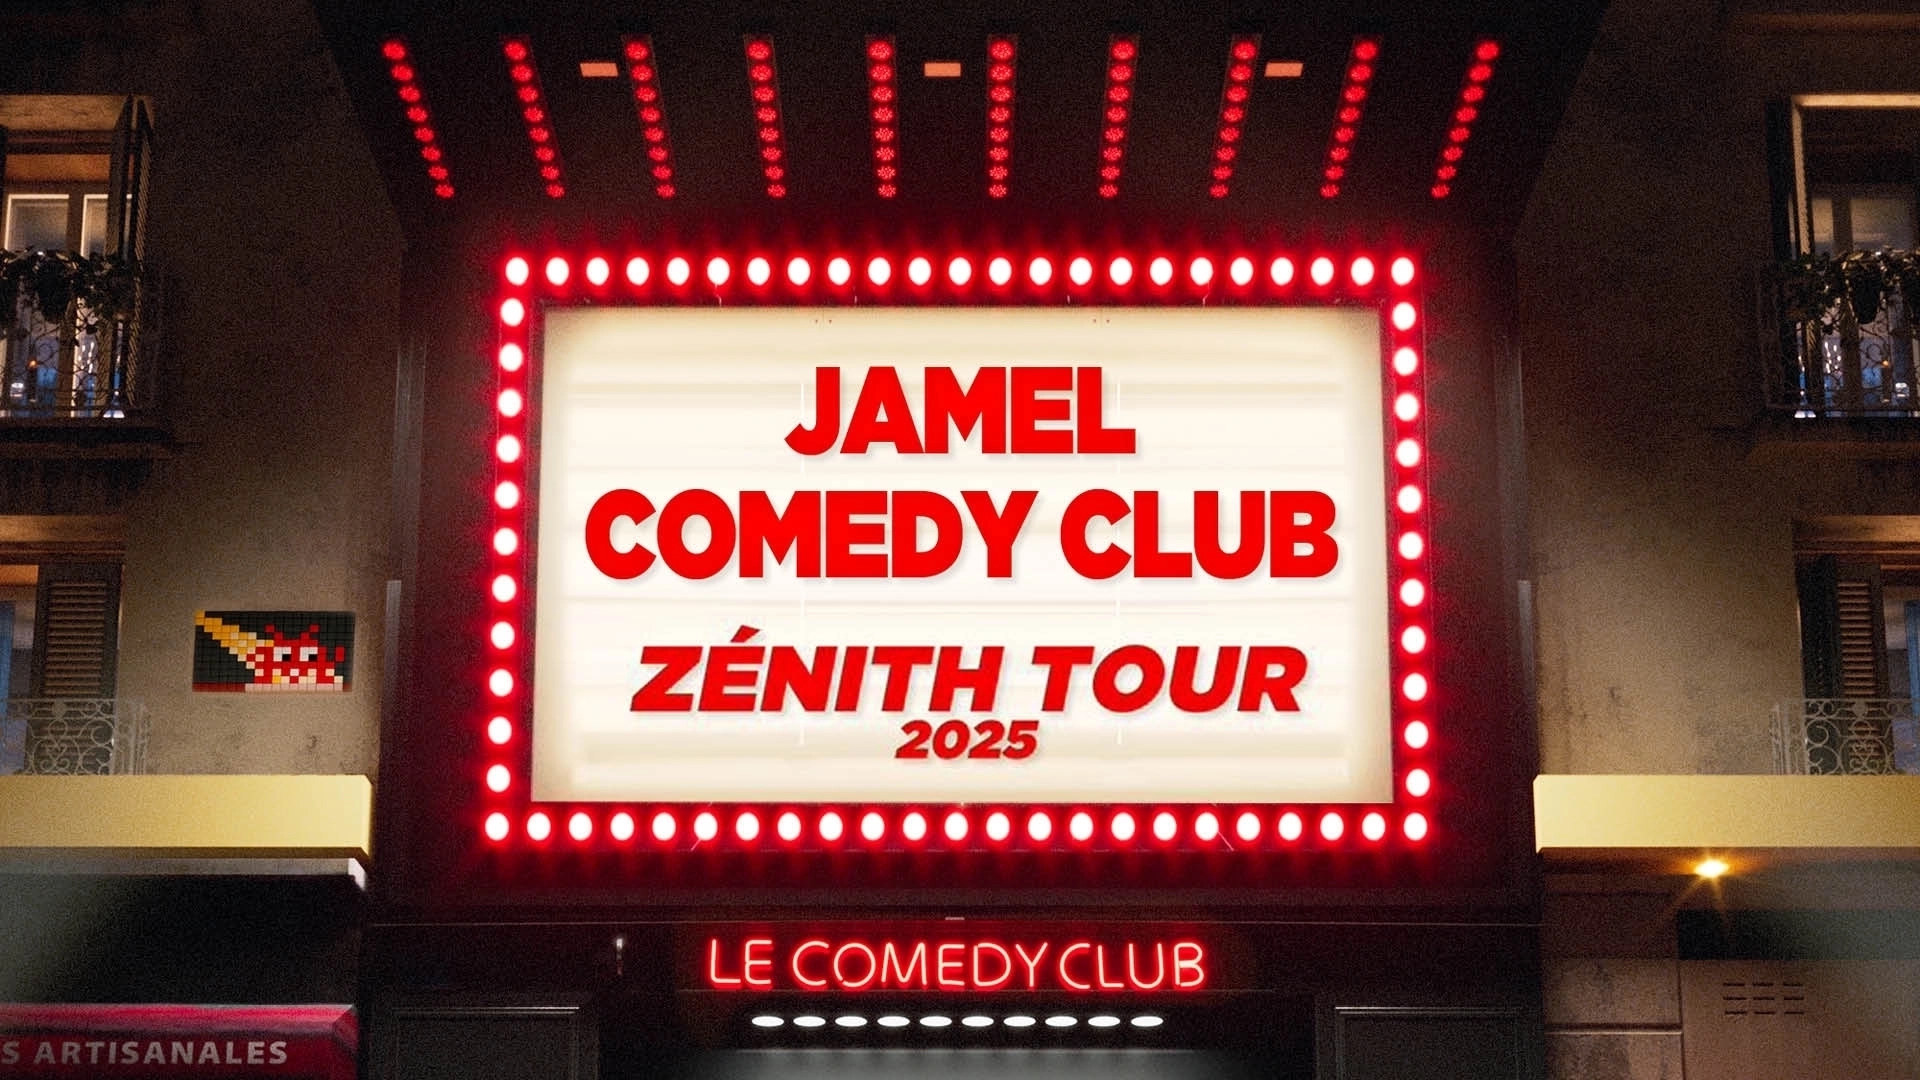 Jamel Comedy Club Zenith Tour 2025 en Reims Arena Tickets